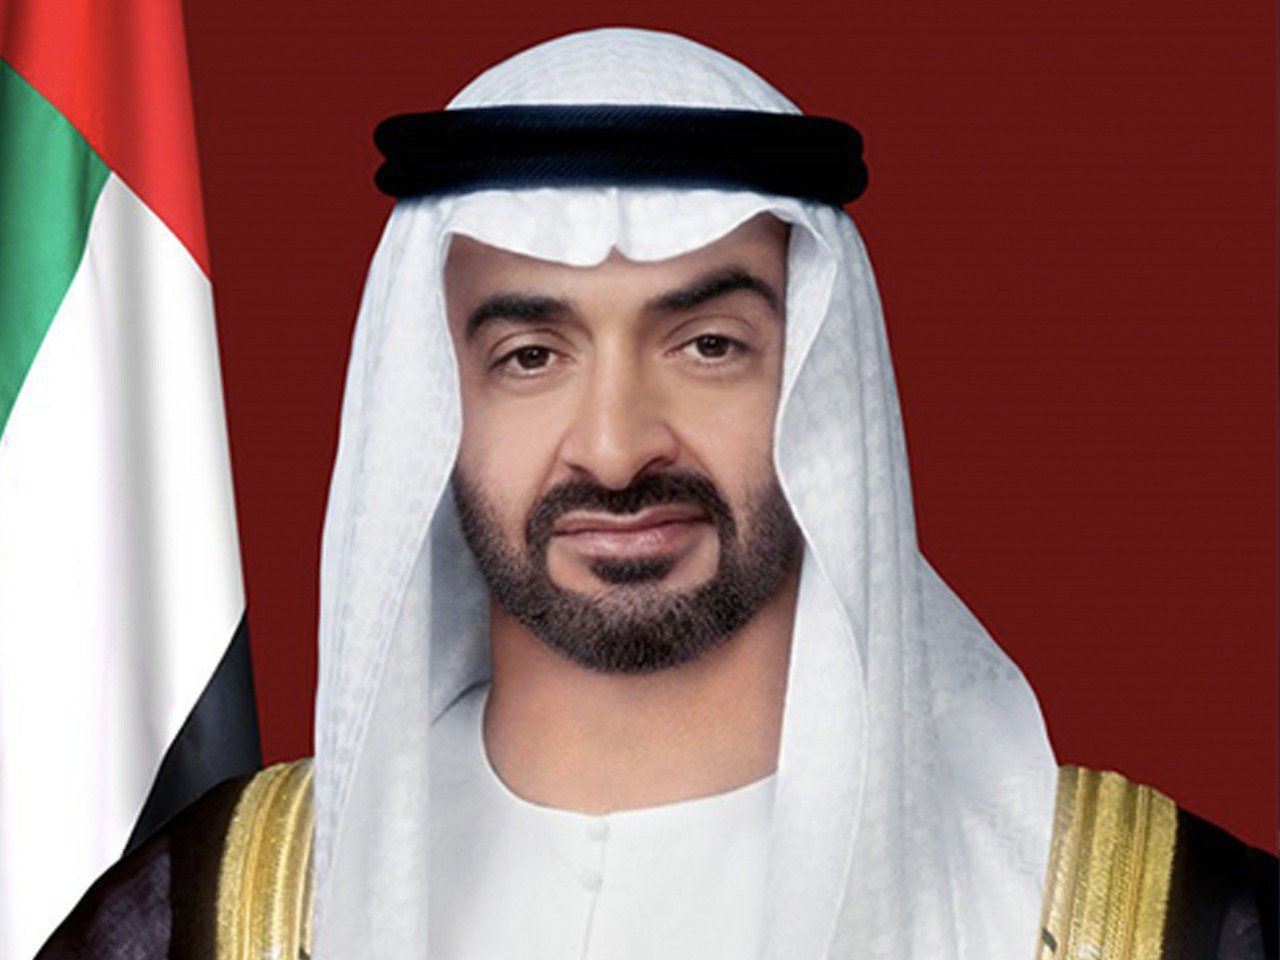 UAE President Sheikh Mohammead bin Zayed Al-Nahyan